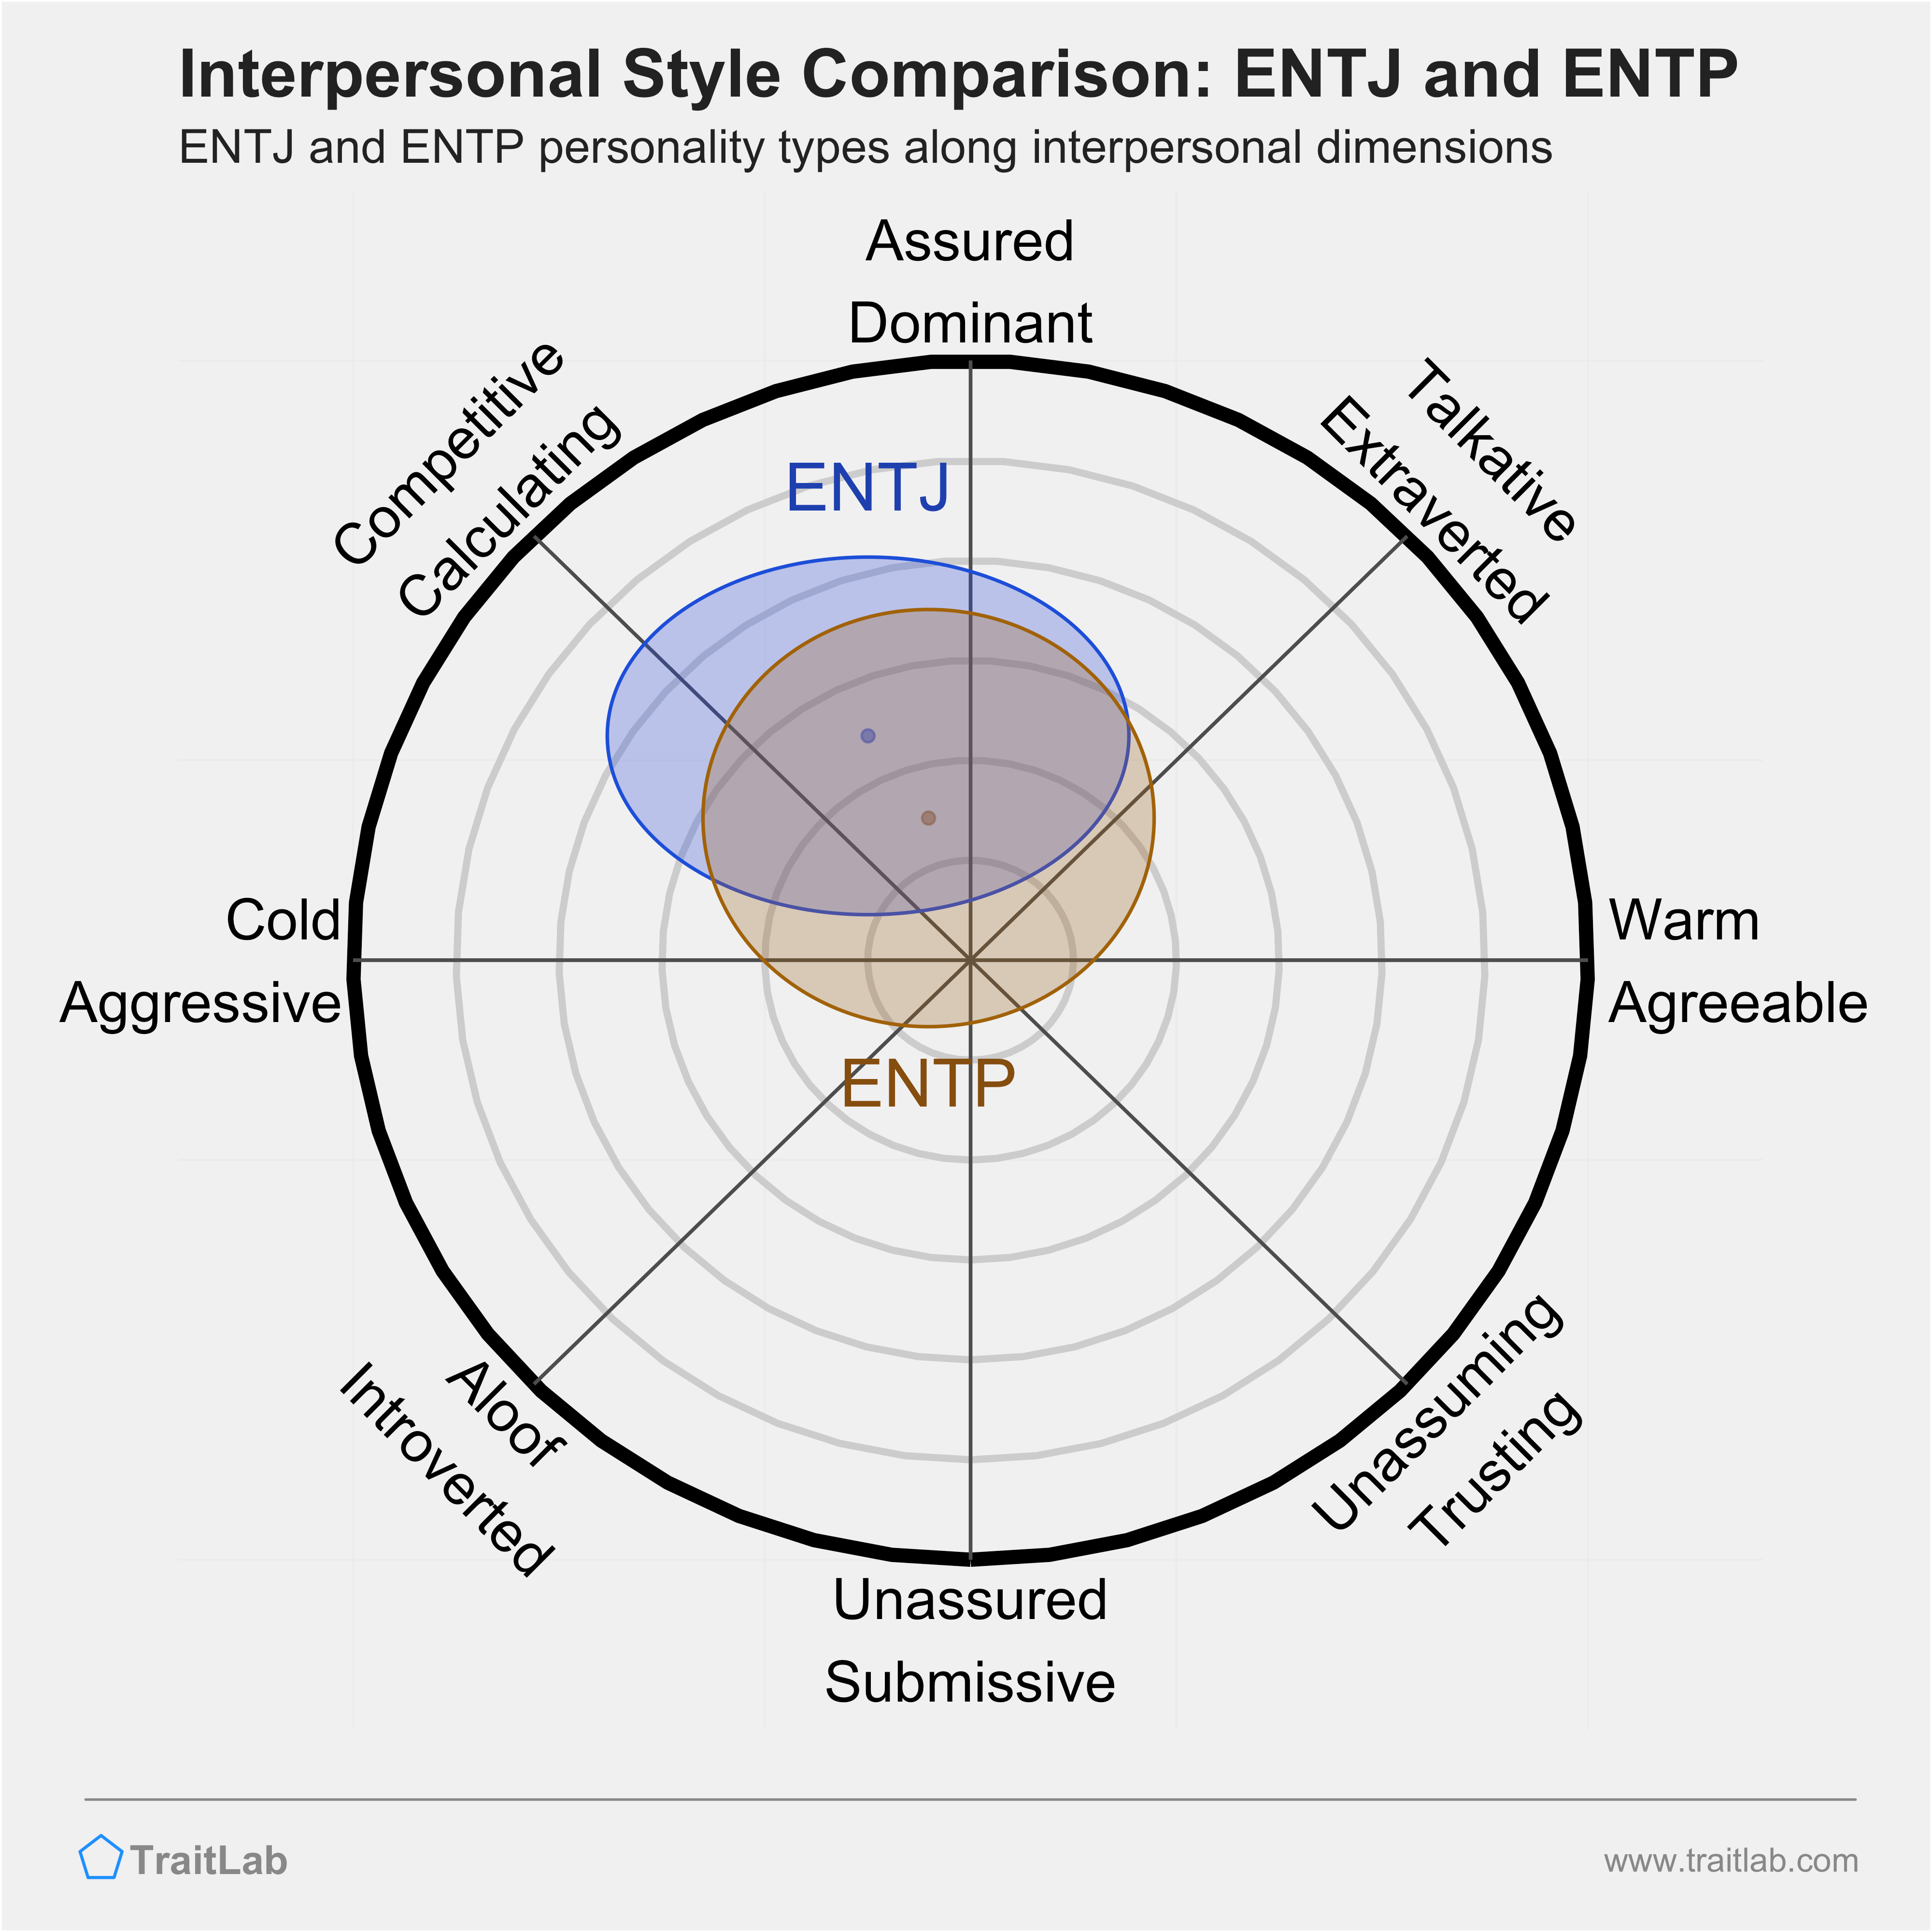 ENTJ and ENTP comparison across interpersonal dimensions